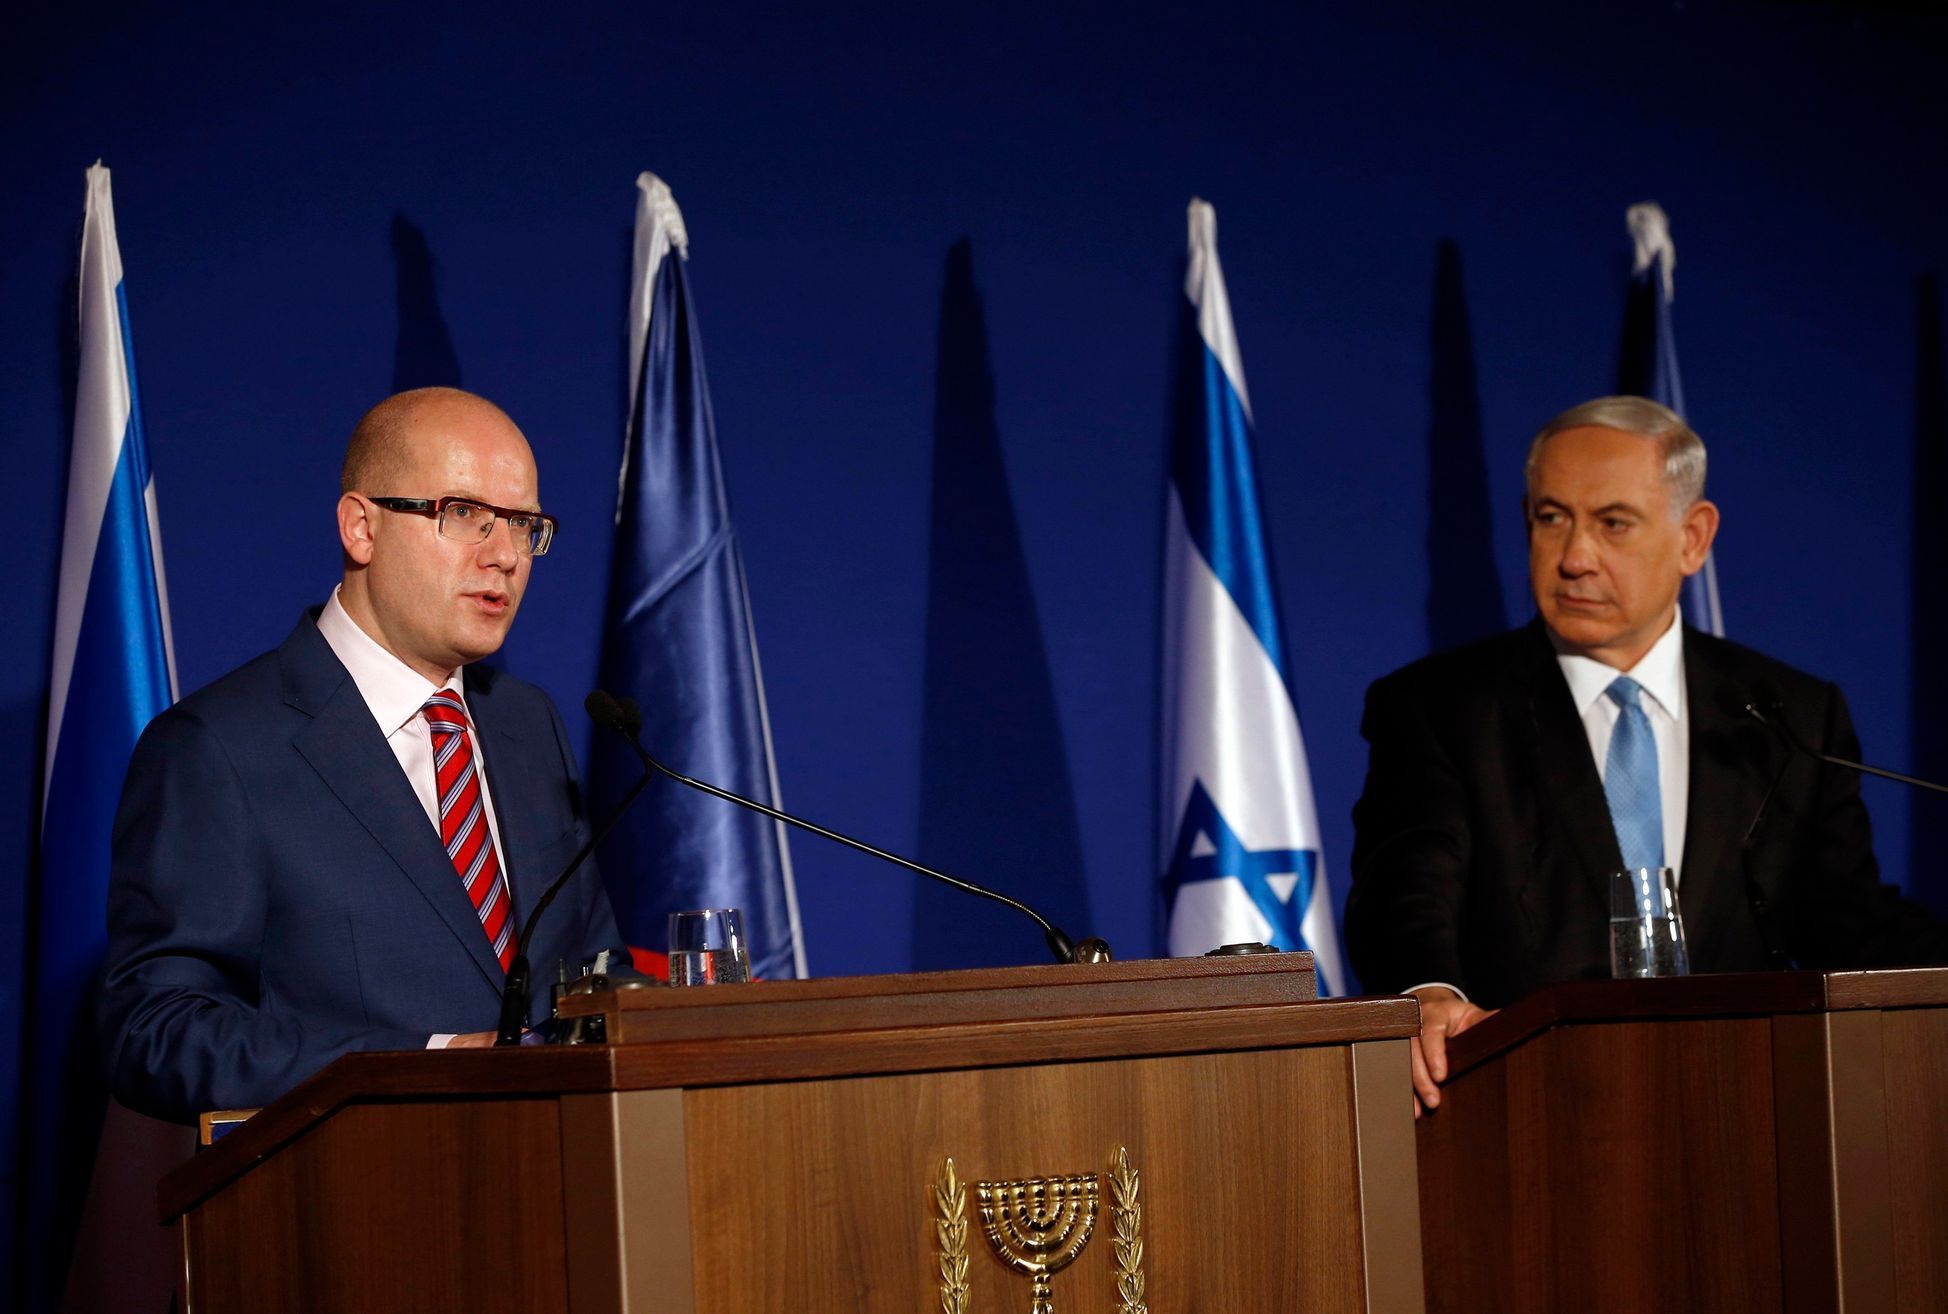 Sobotka a izraelský premiér Netanjahu